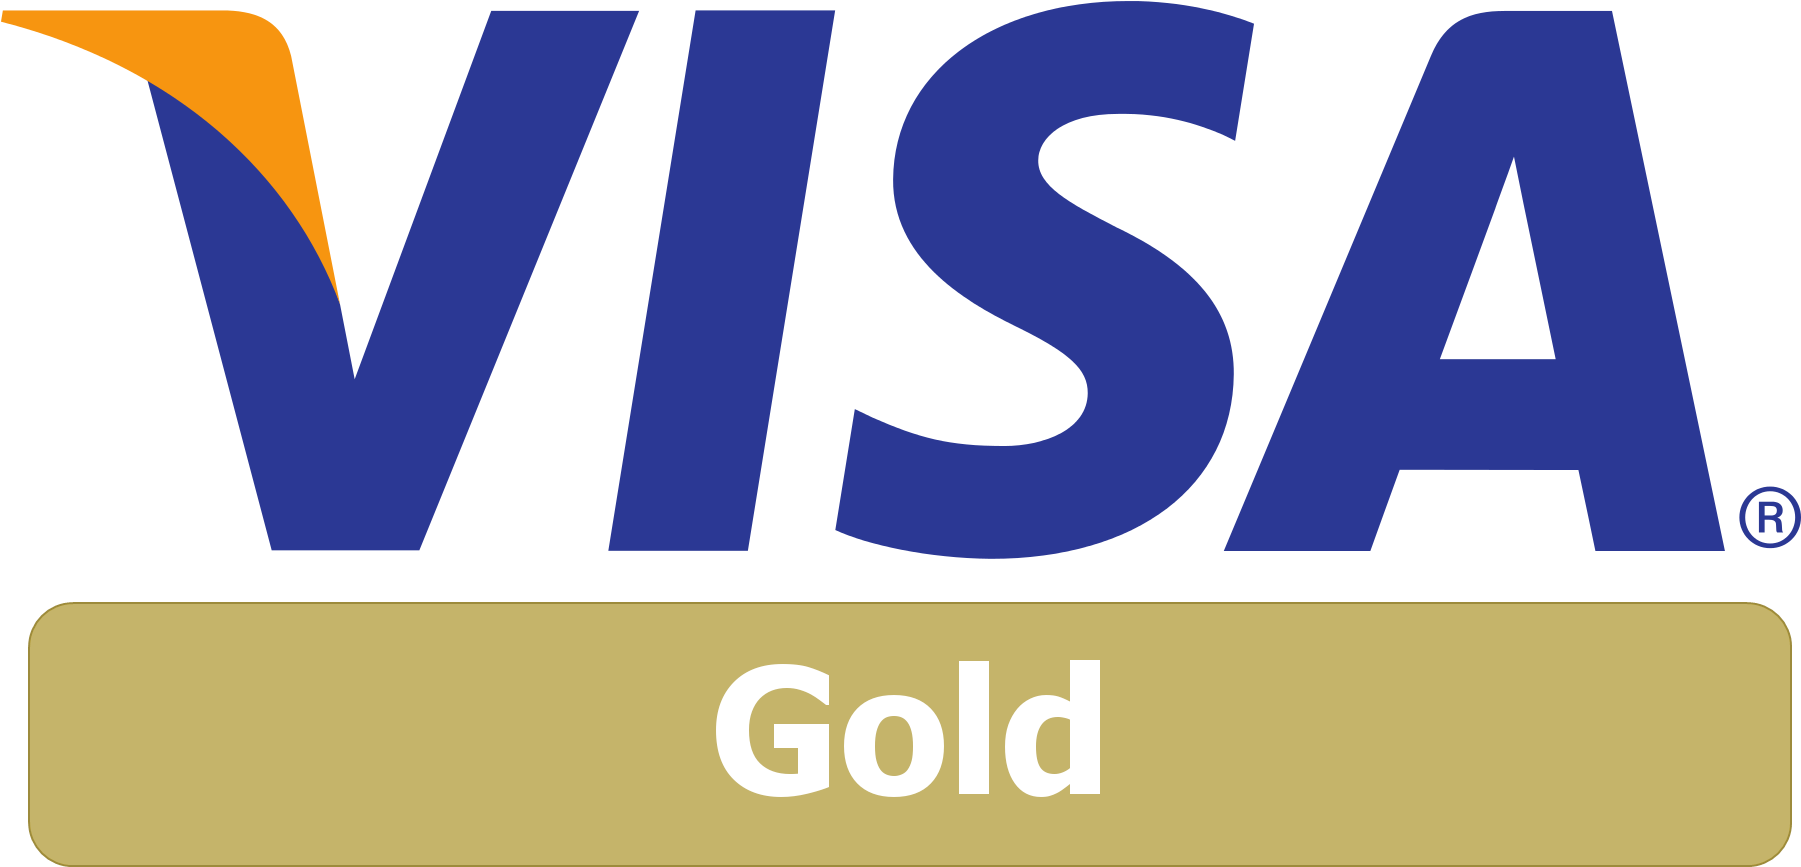 Product - Visa Debit (2000x970), Png Download